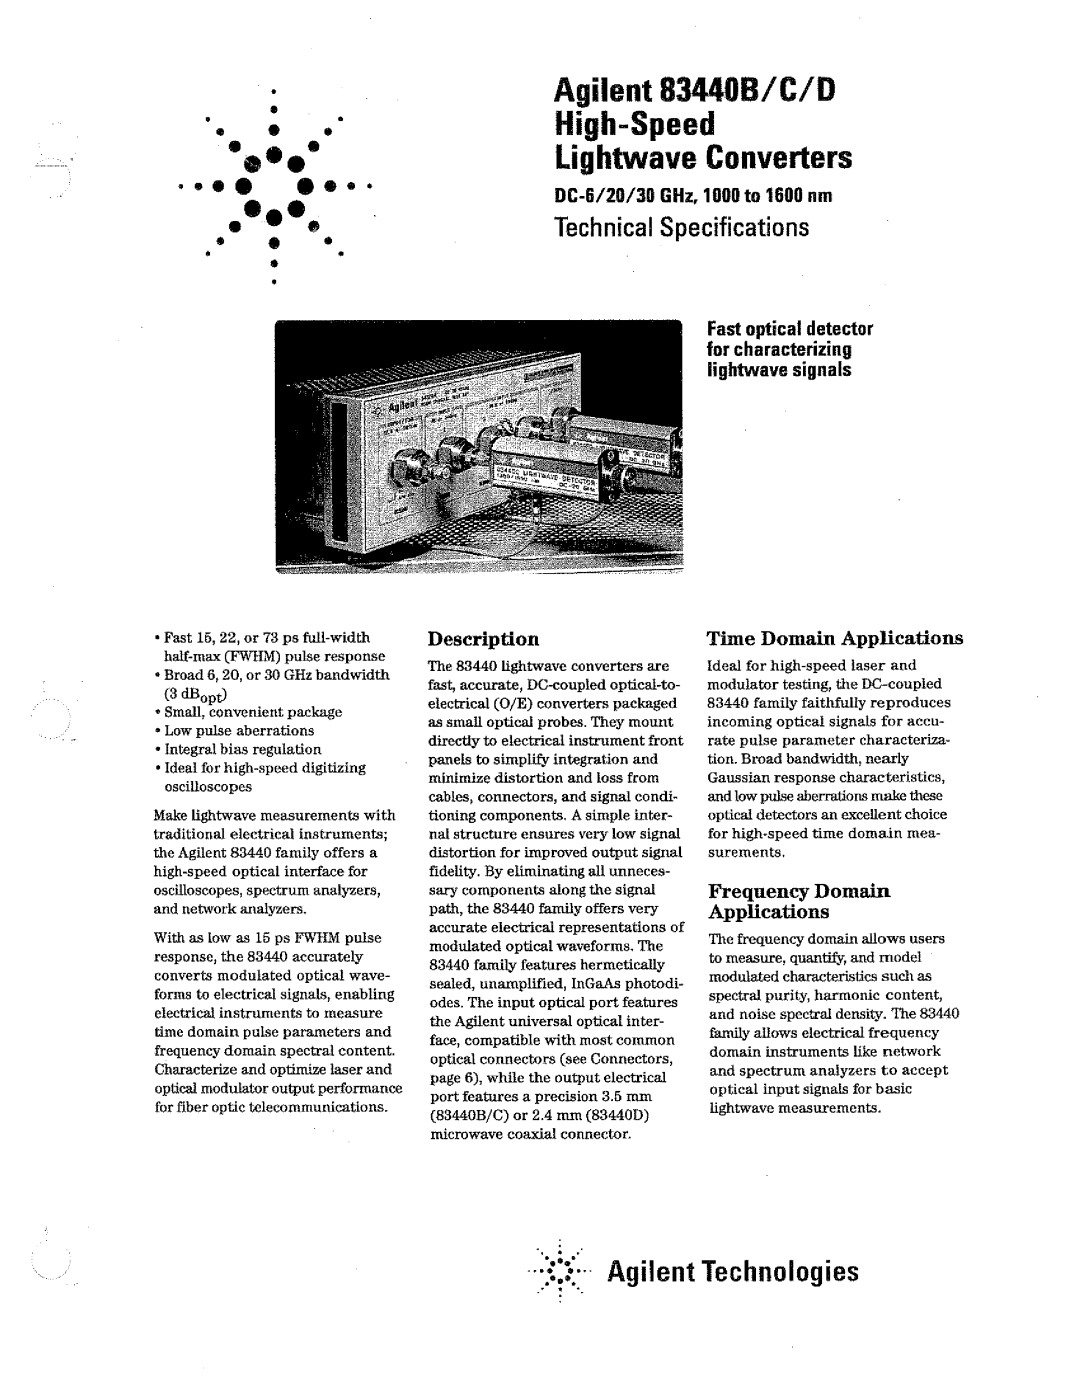 Agilent Technologies 83440b, D, c manual 